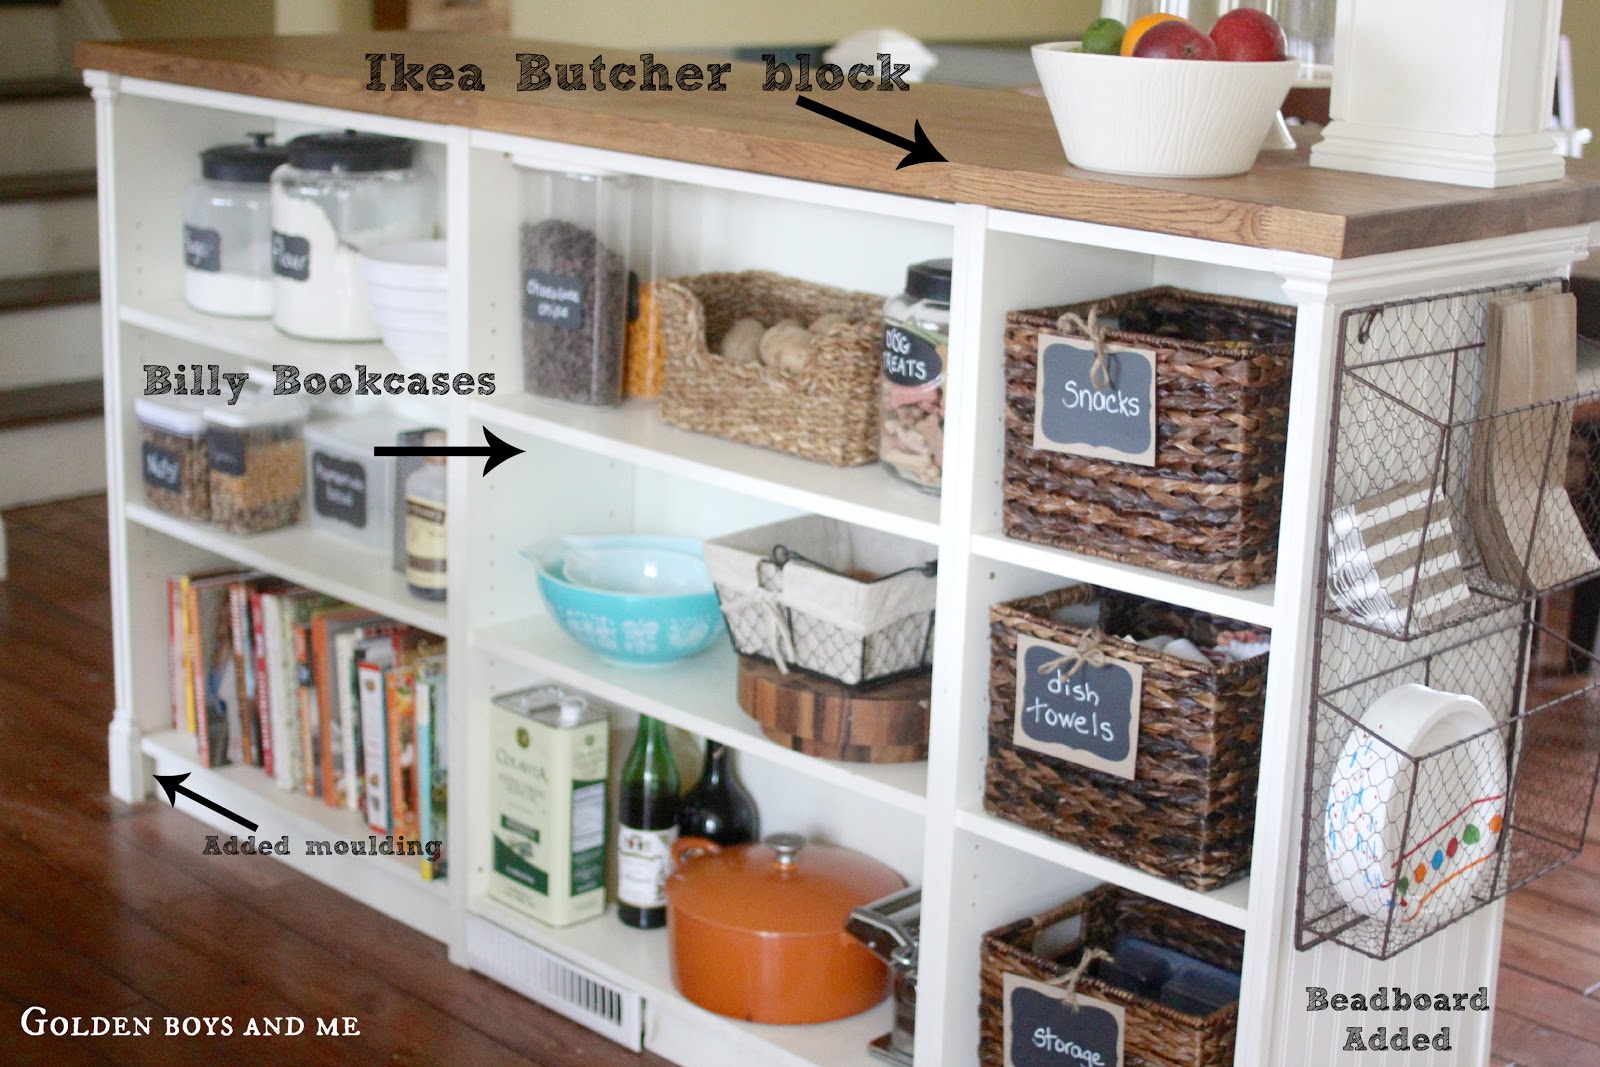 12 IKEA Kitchen Ideas - Organize Your Kitchen With IKEA Hacks